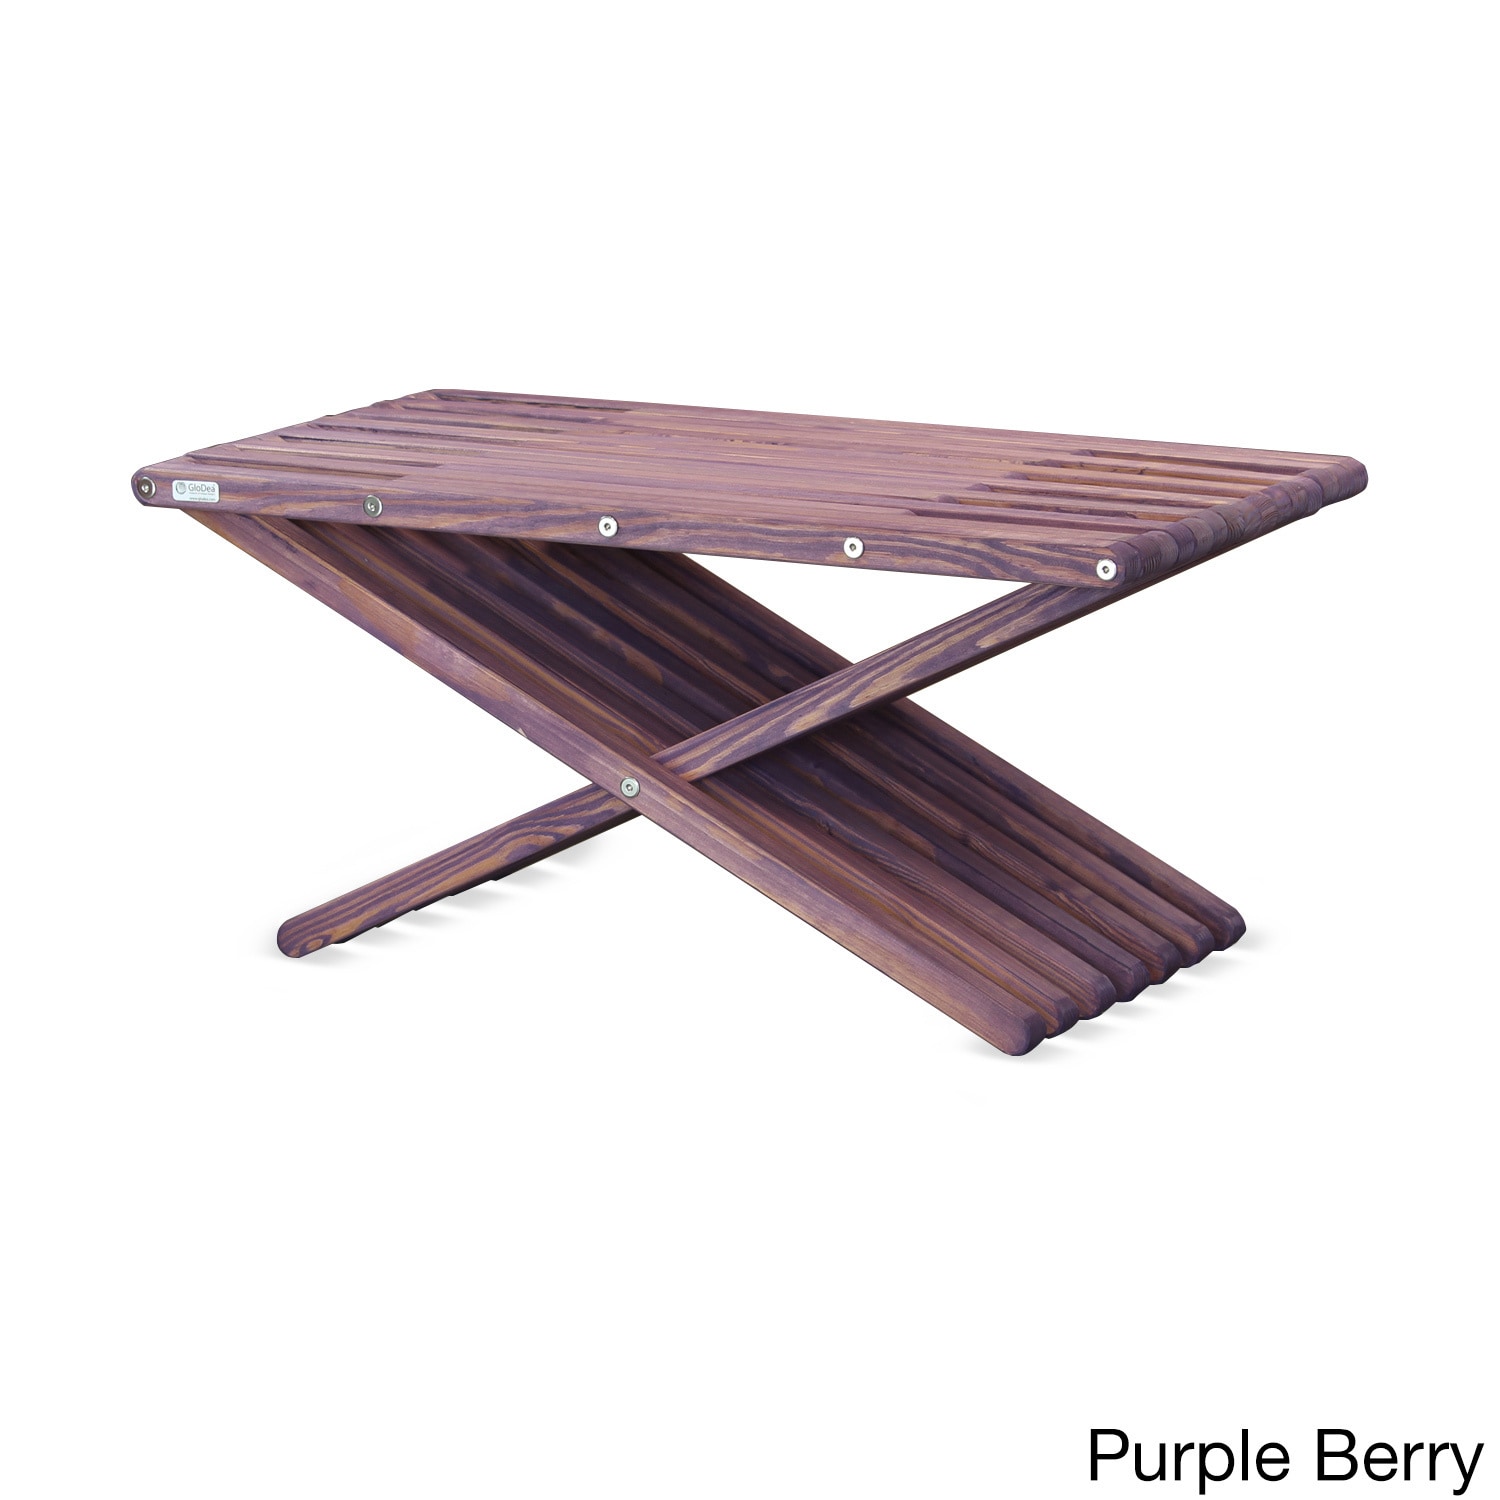 GloDea Eco Friendly Wood Coffee Table 20 x 36 by  Sky Blue - image 2 of 5